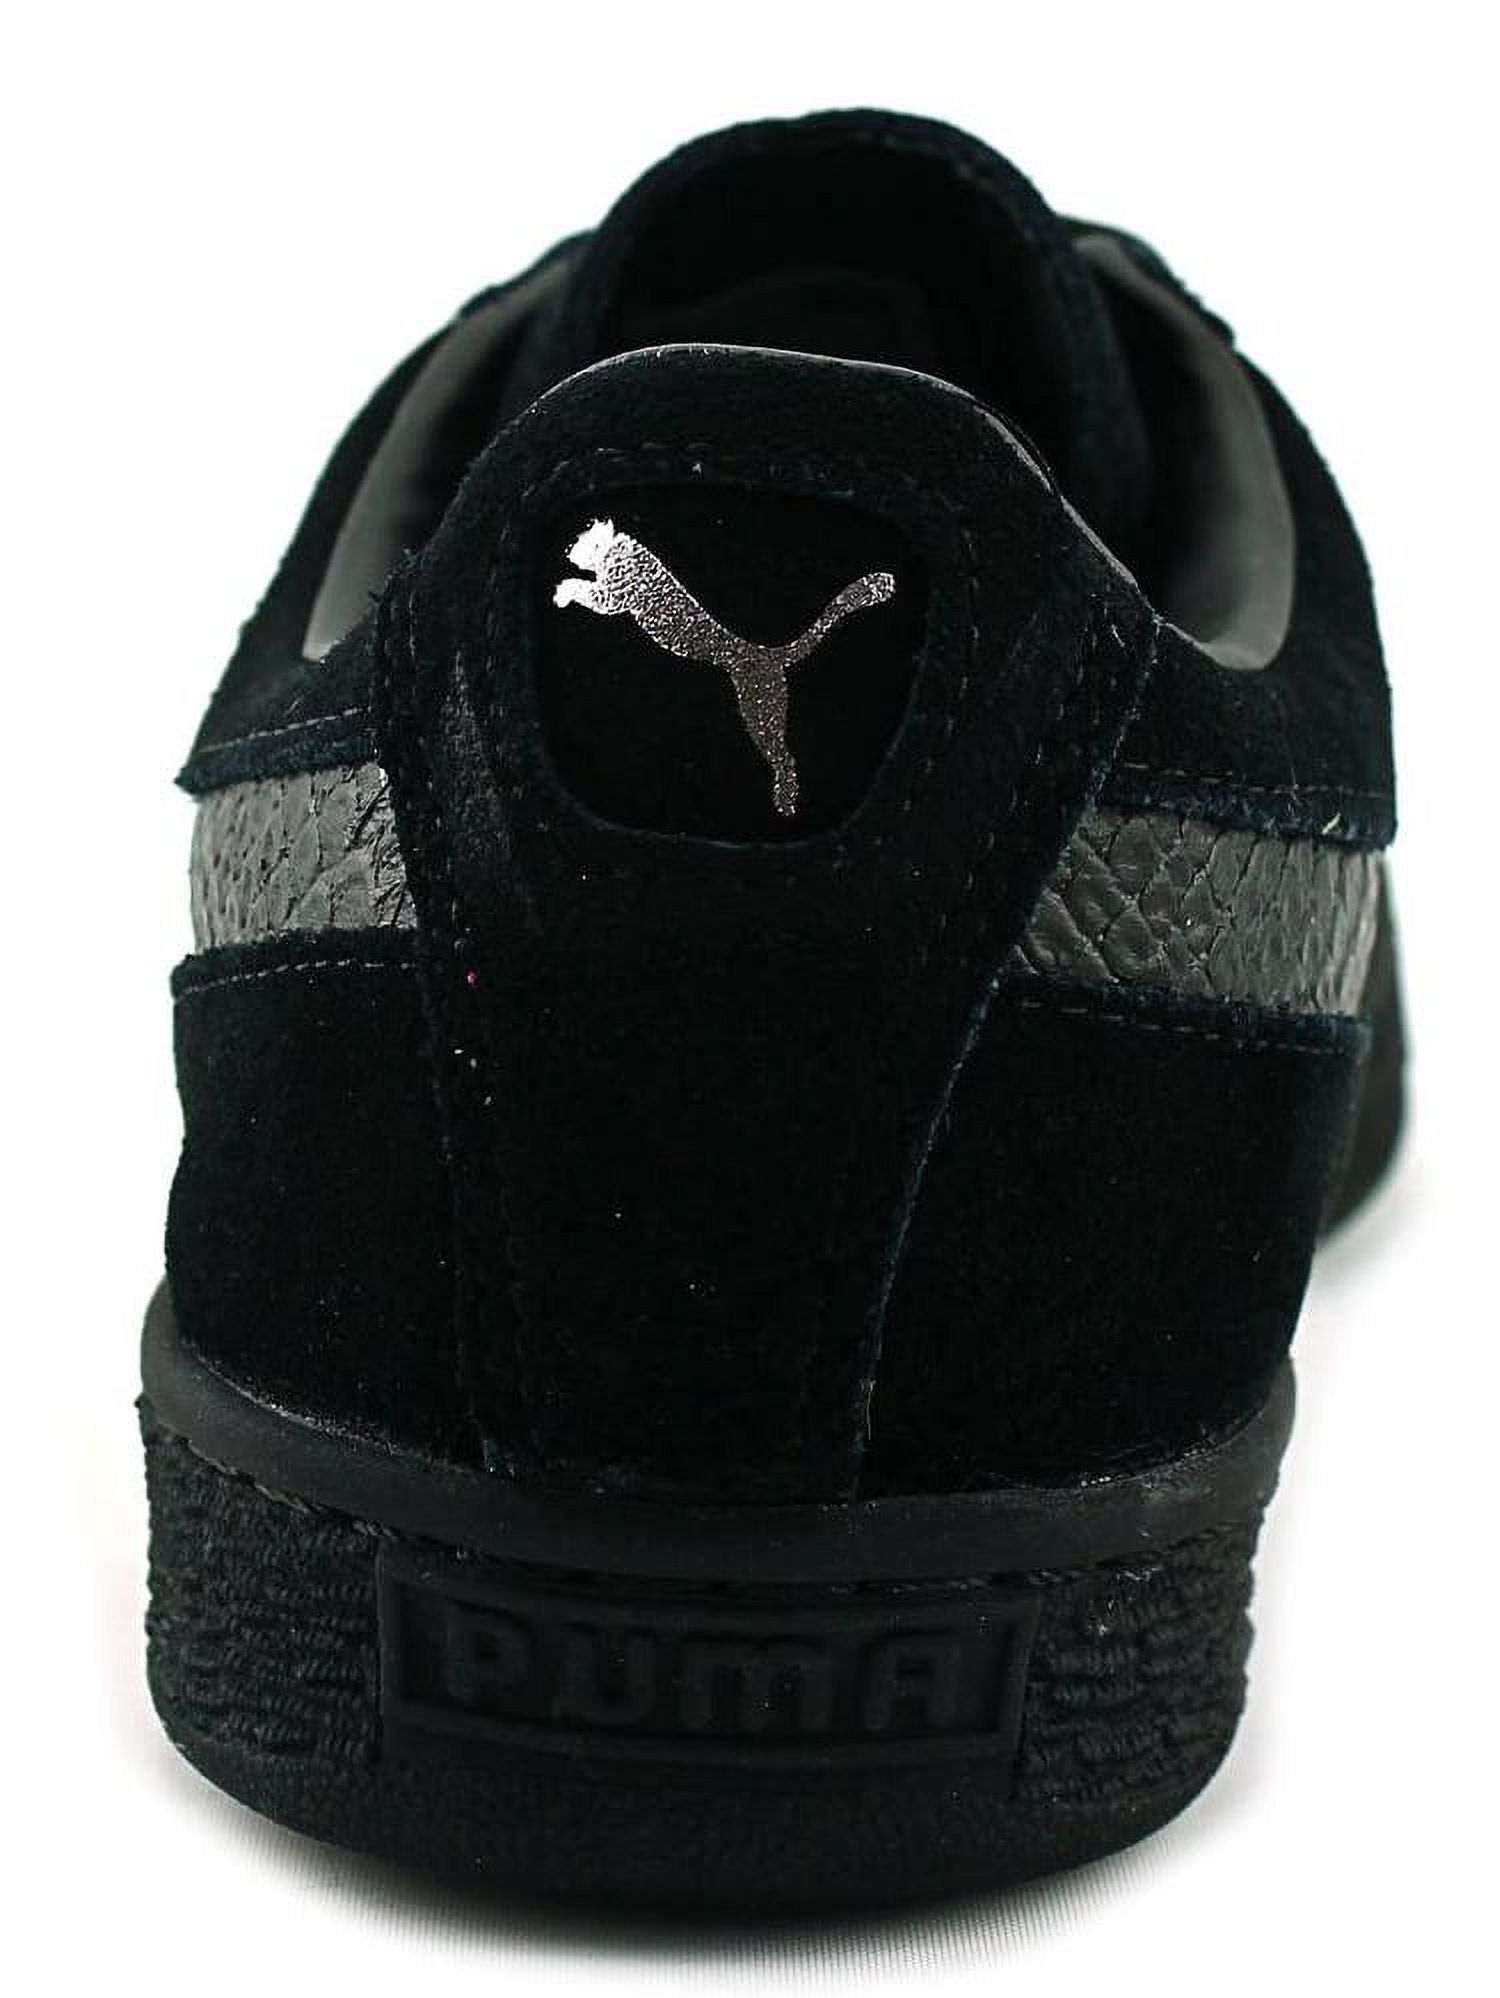 PUMA Men's Suede Classic Mono Reptile Fashion Sneaker, Black, 4 D(M) US (Puma Black-puma Silv, 13 D(M) US) - image 2 of 5